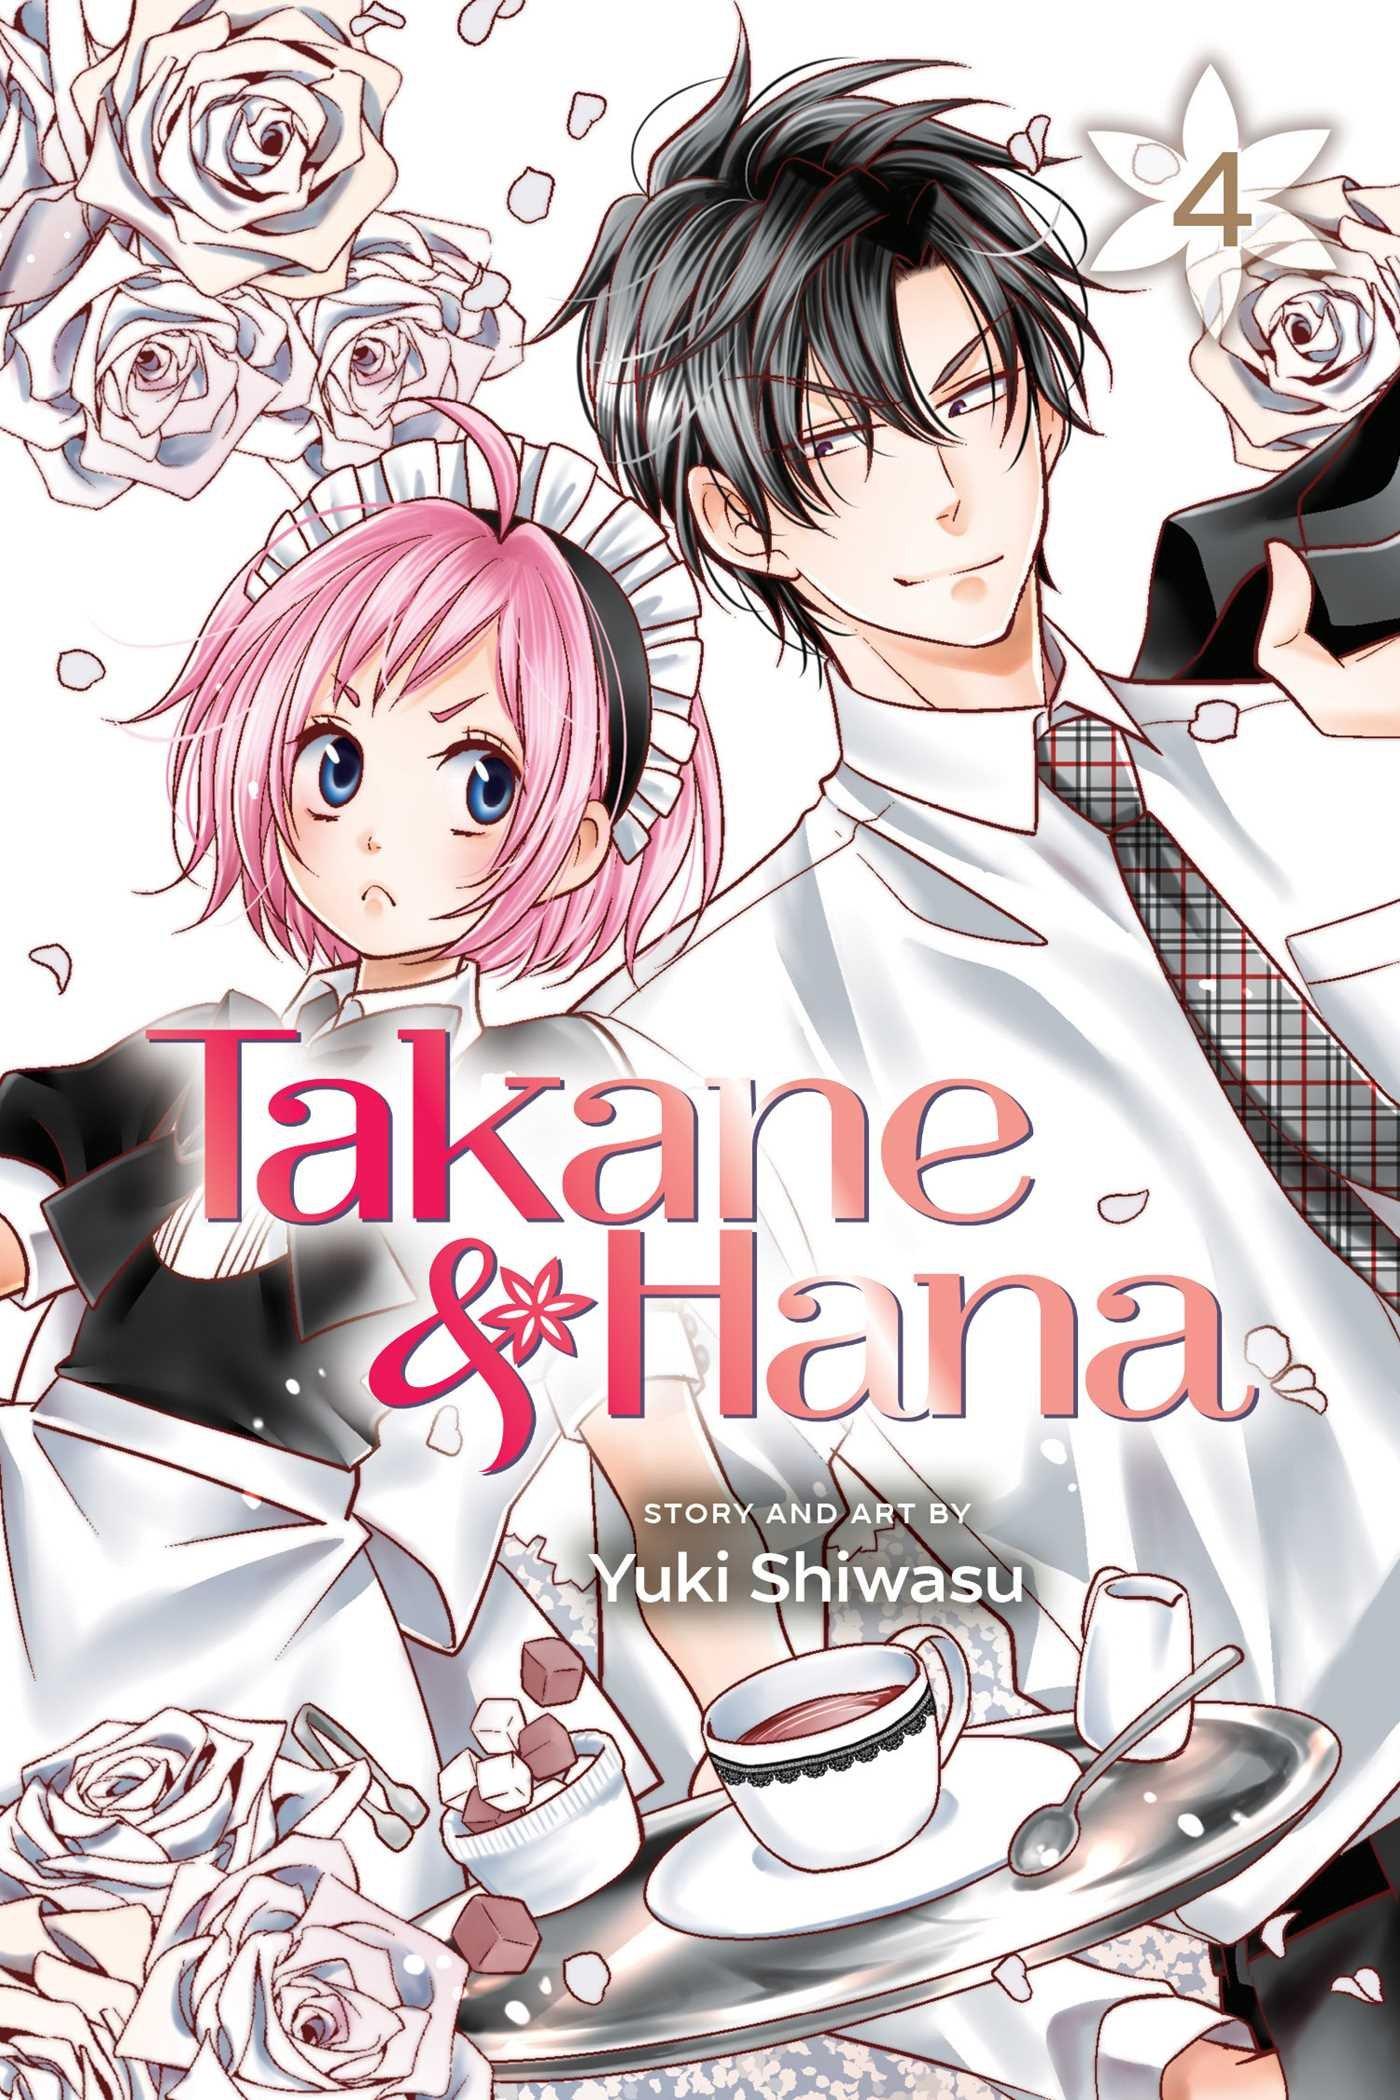 Takane & Hana 04